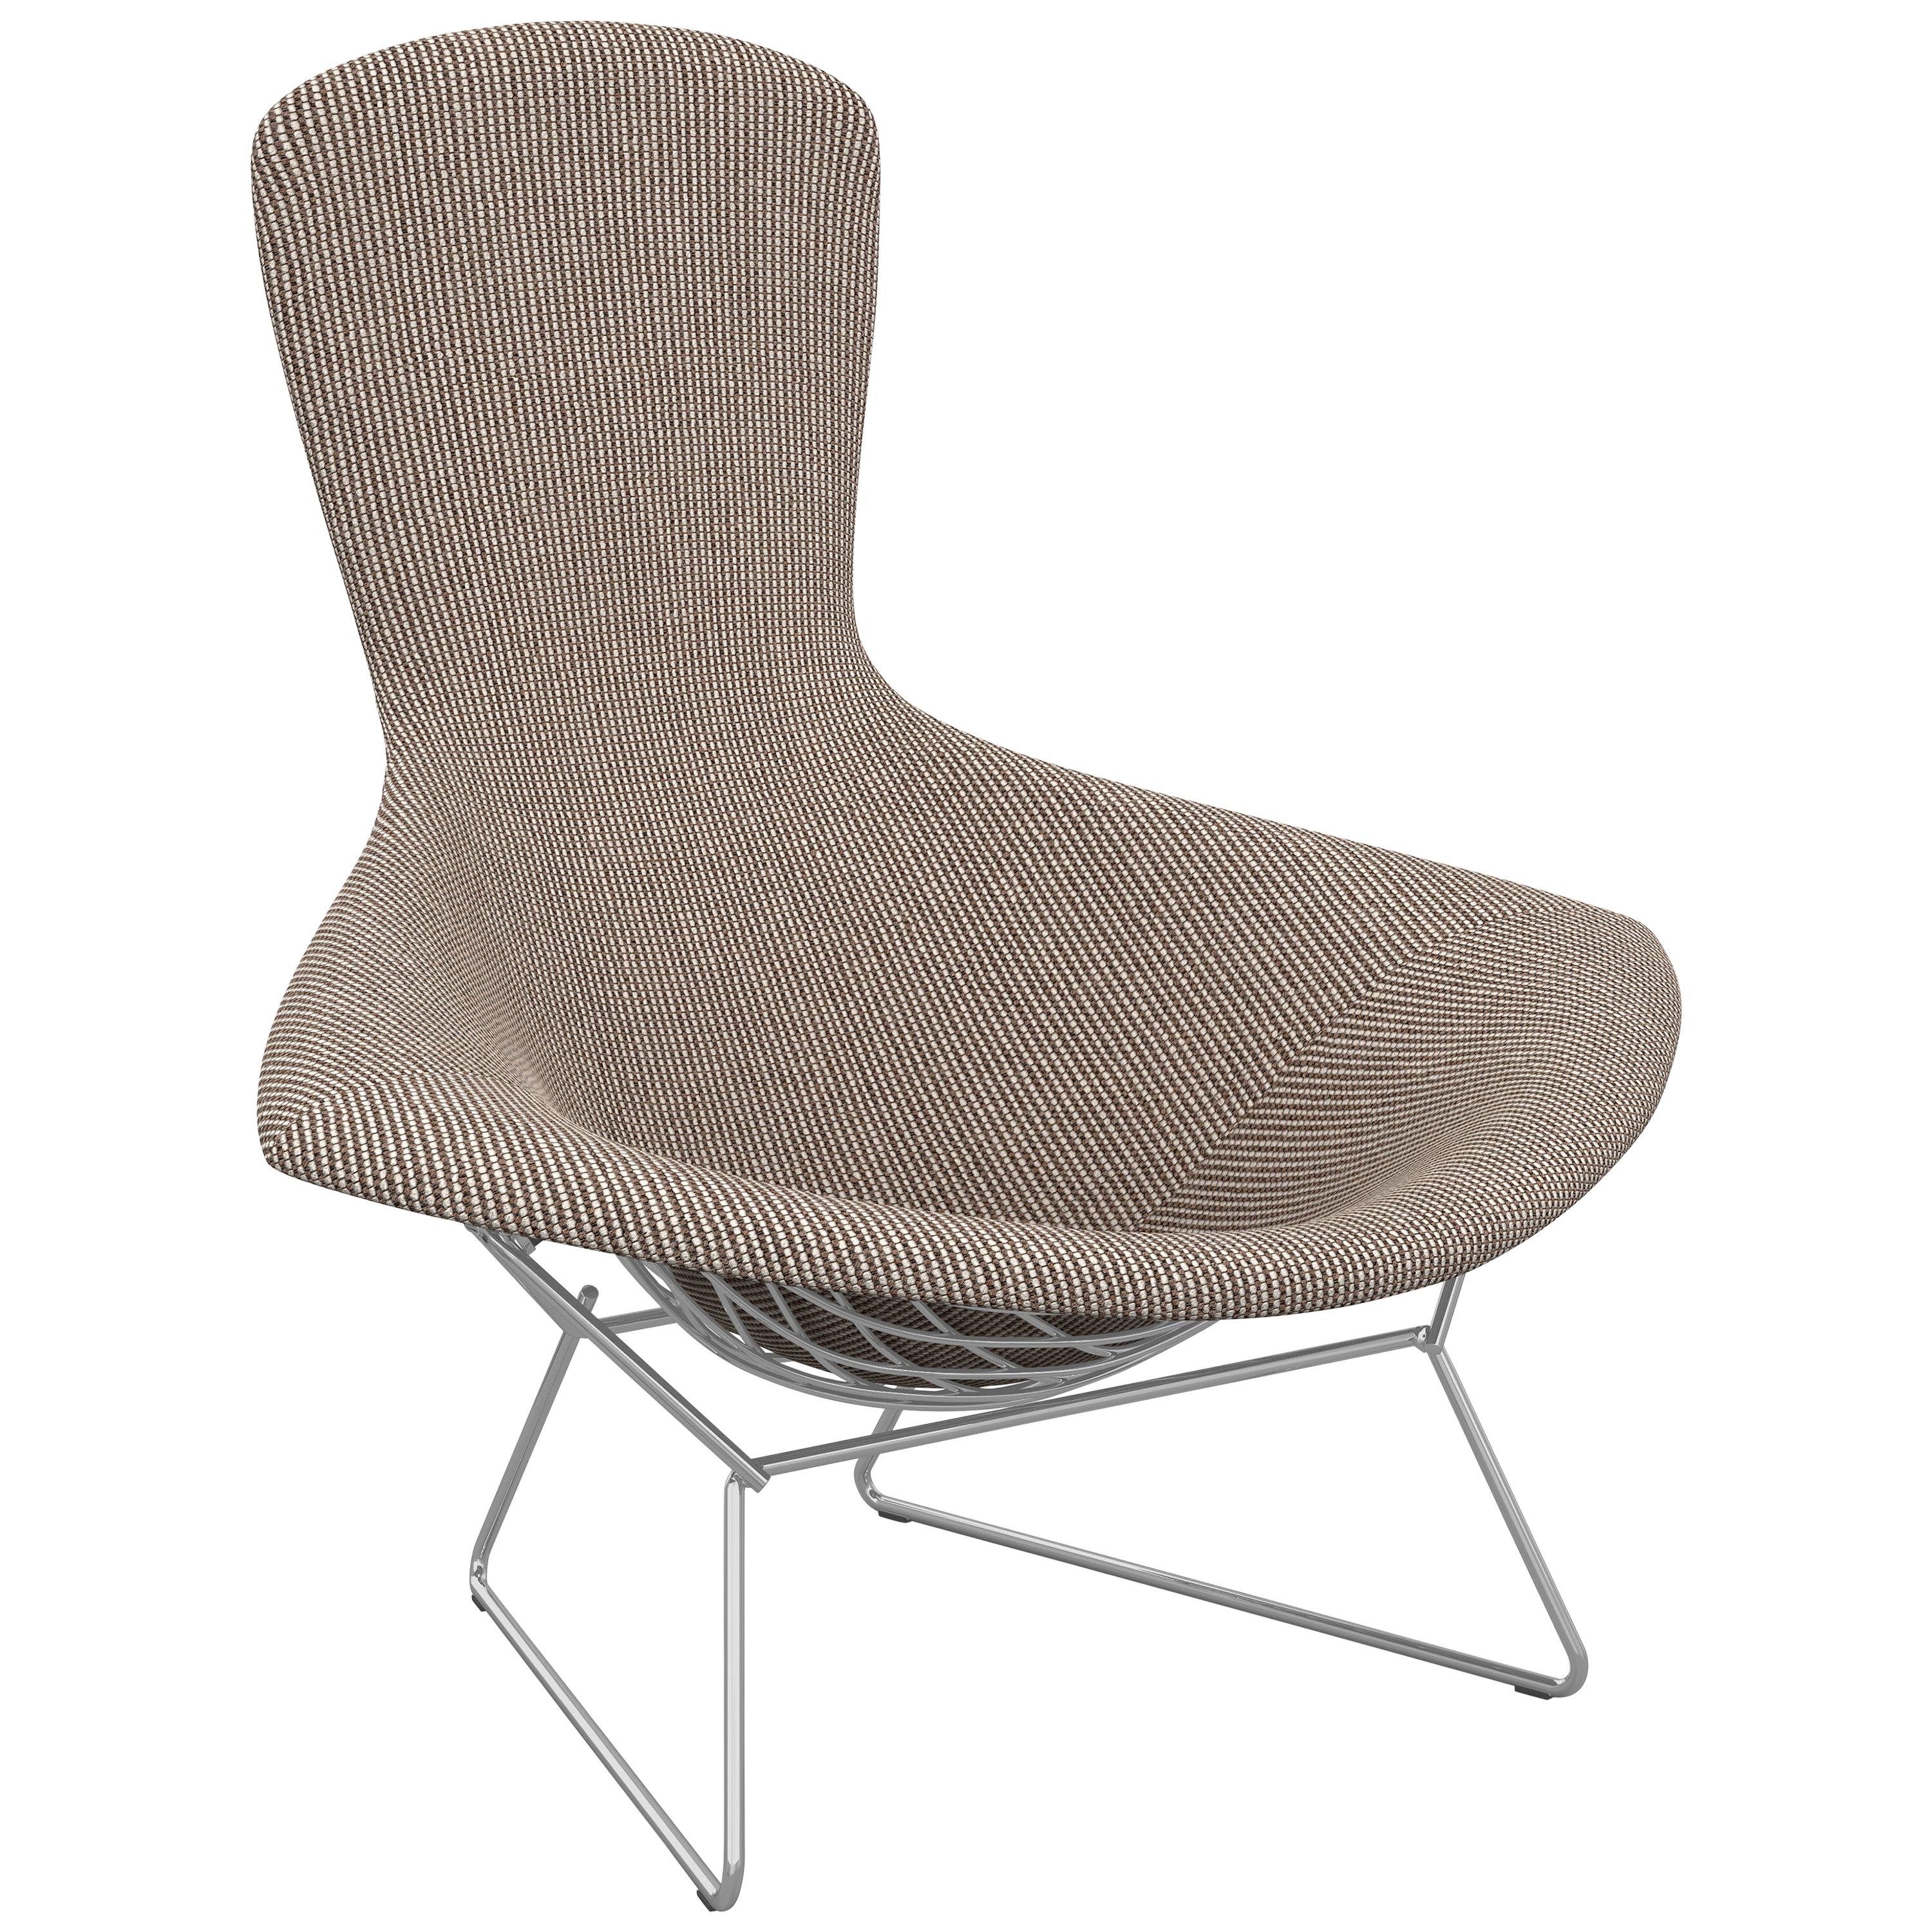 Bertoia Bird Chair in Cato/Sand Upholstery & Satin Chrome Frame For Sale